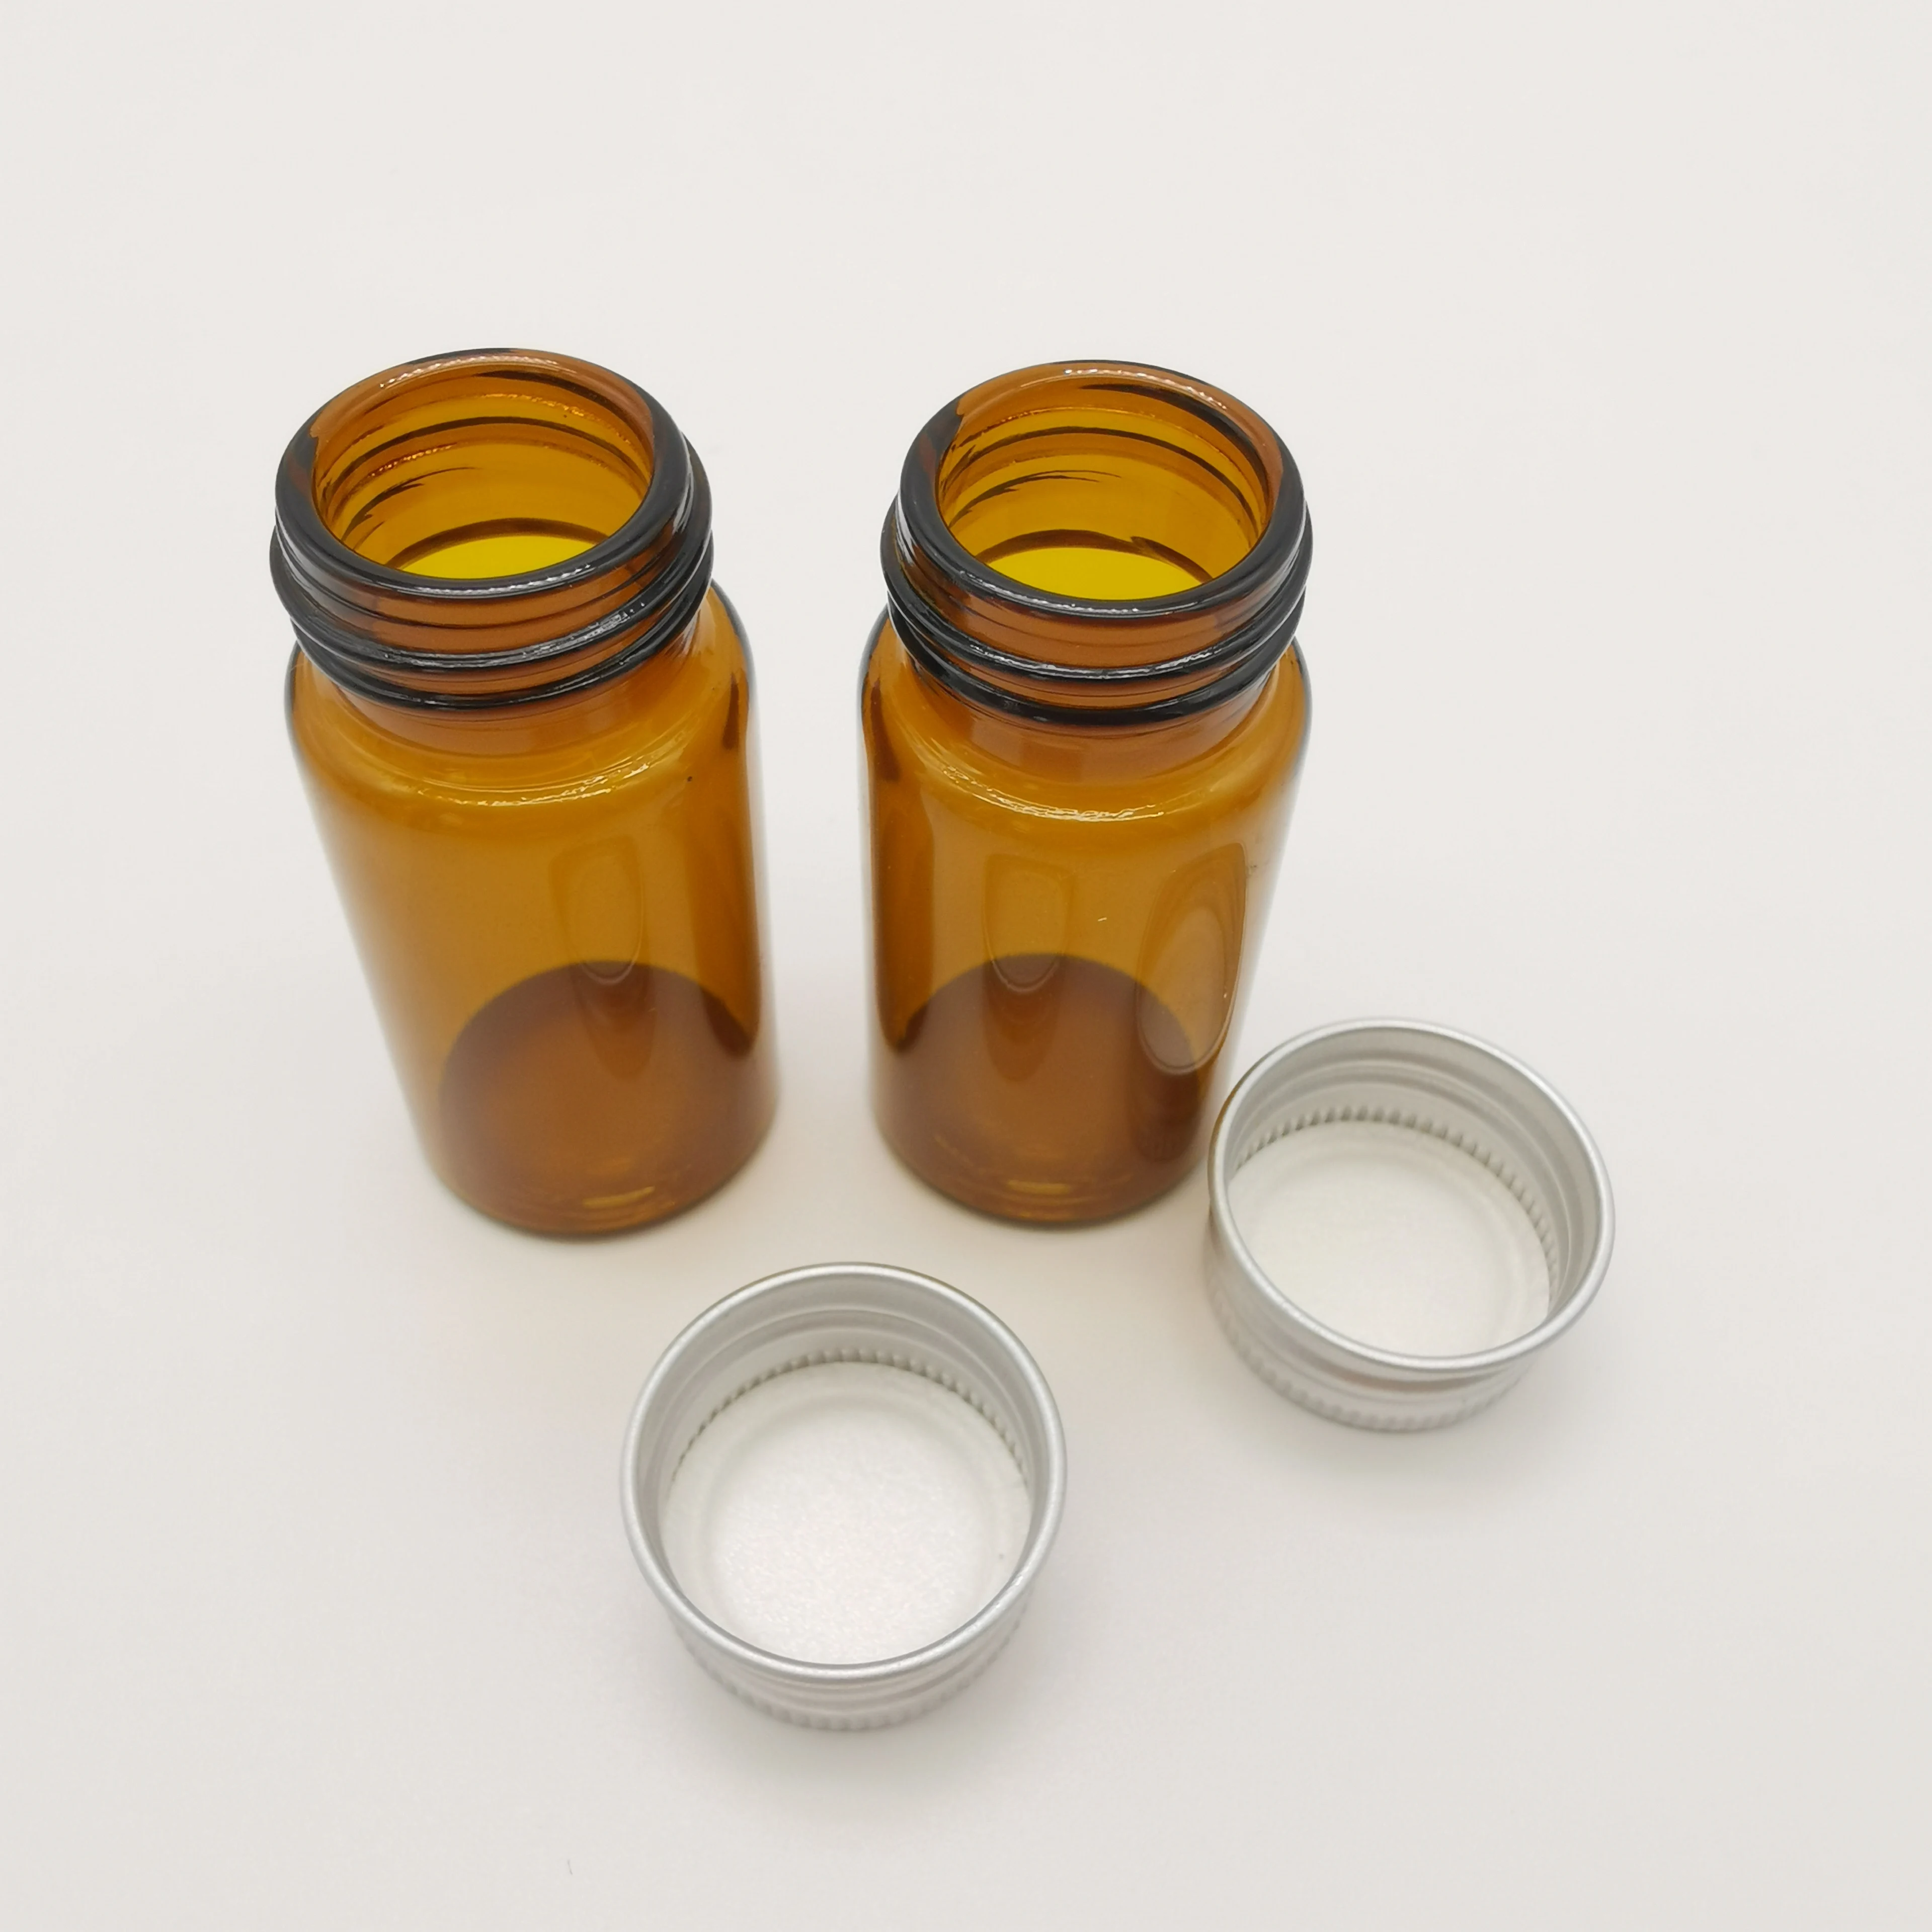 1ml 2ml Empty Amber Perfume Mini Glass Vials With Screw Top